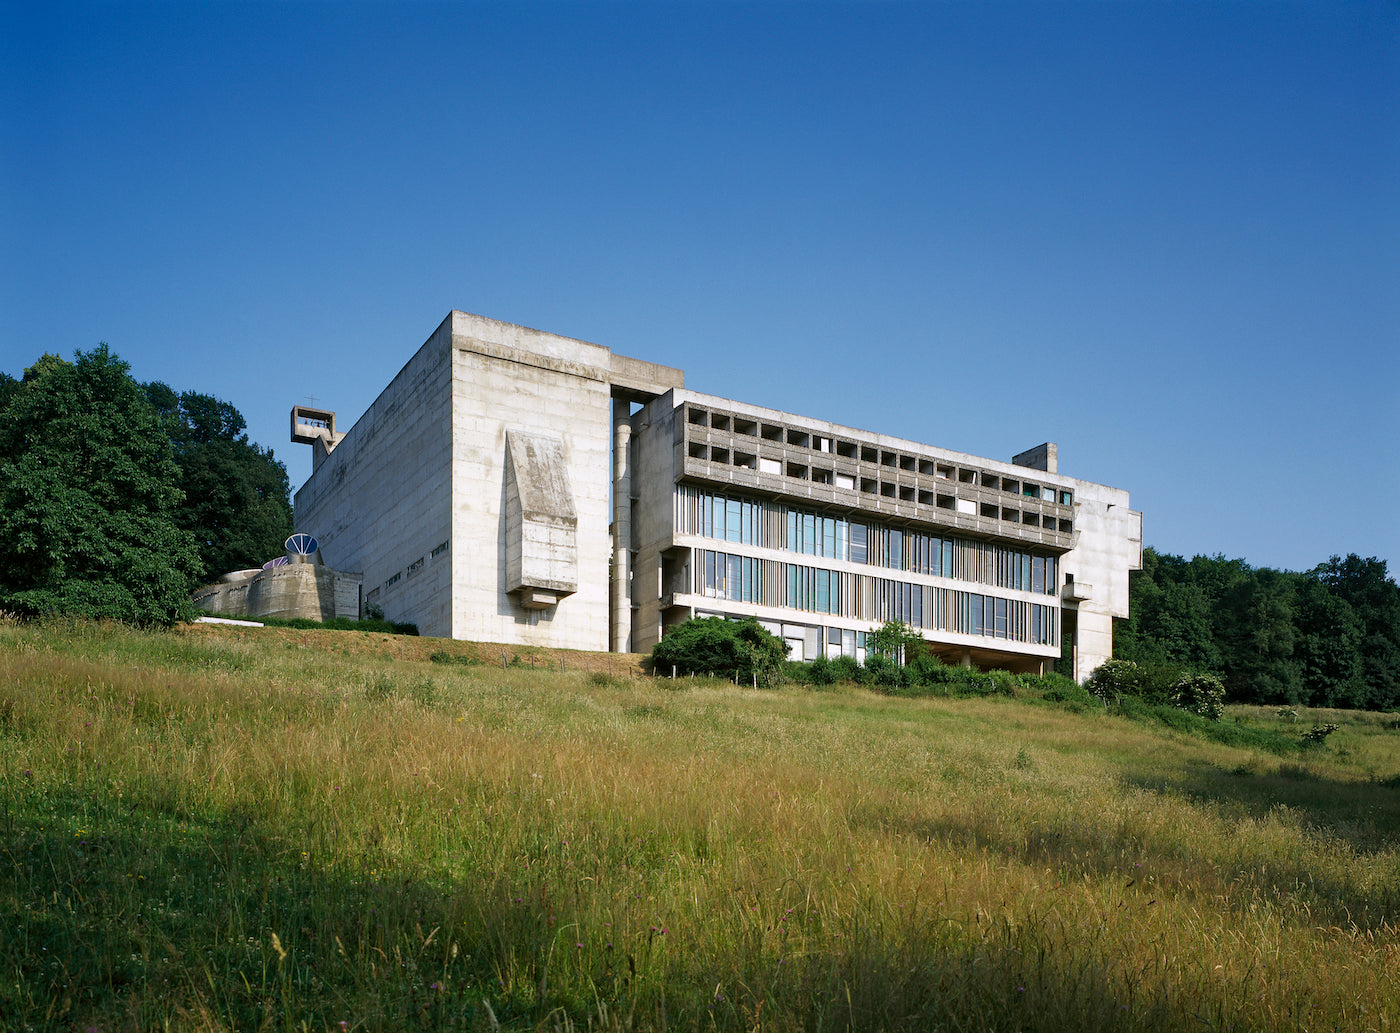 Le Corbusier's Influential Use of Pilotis